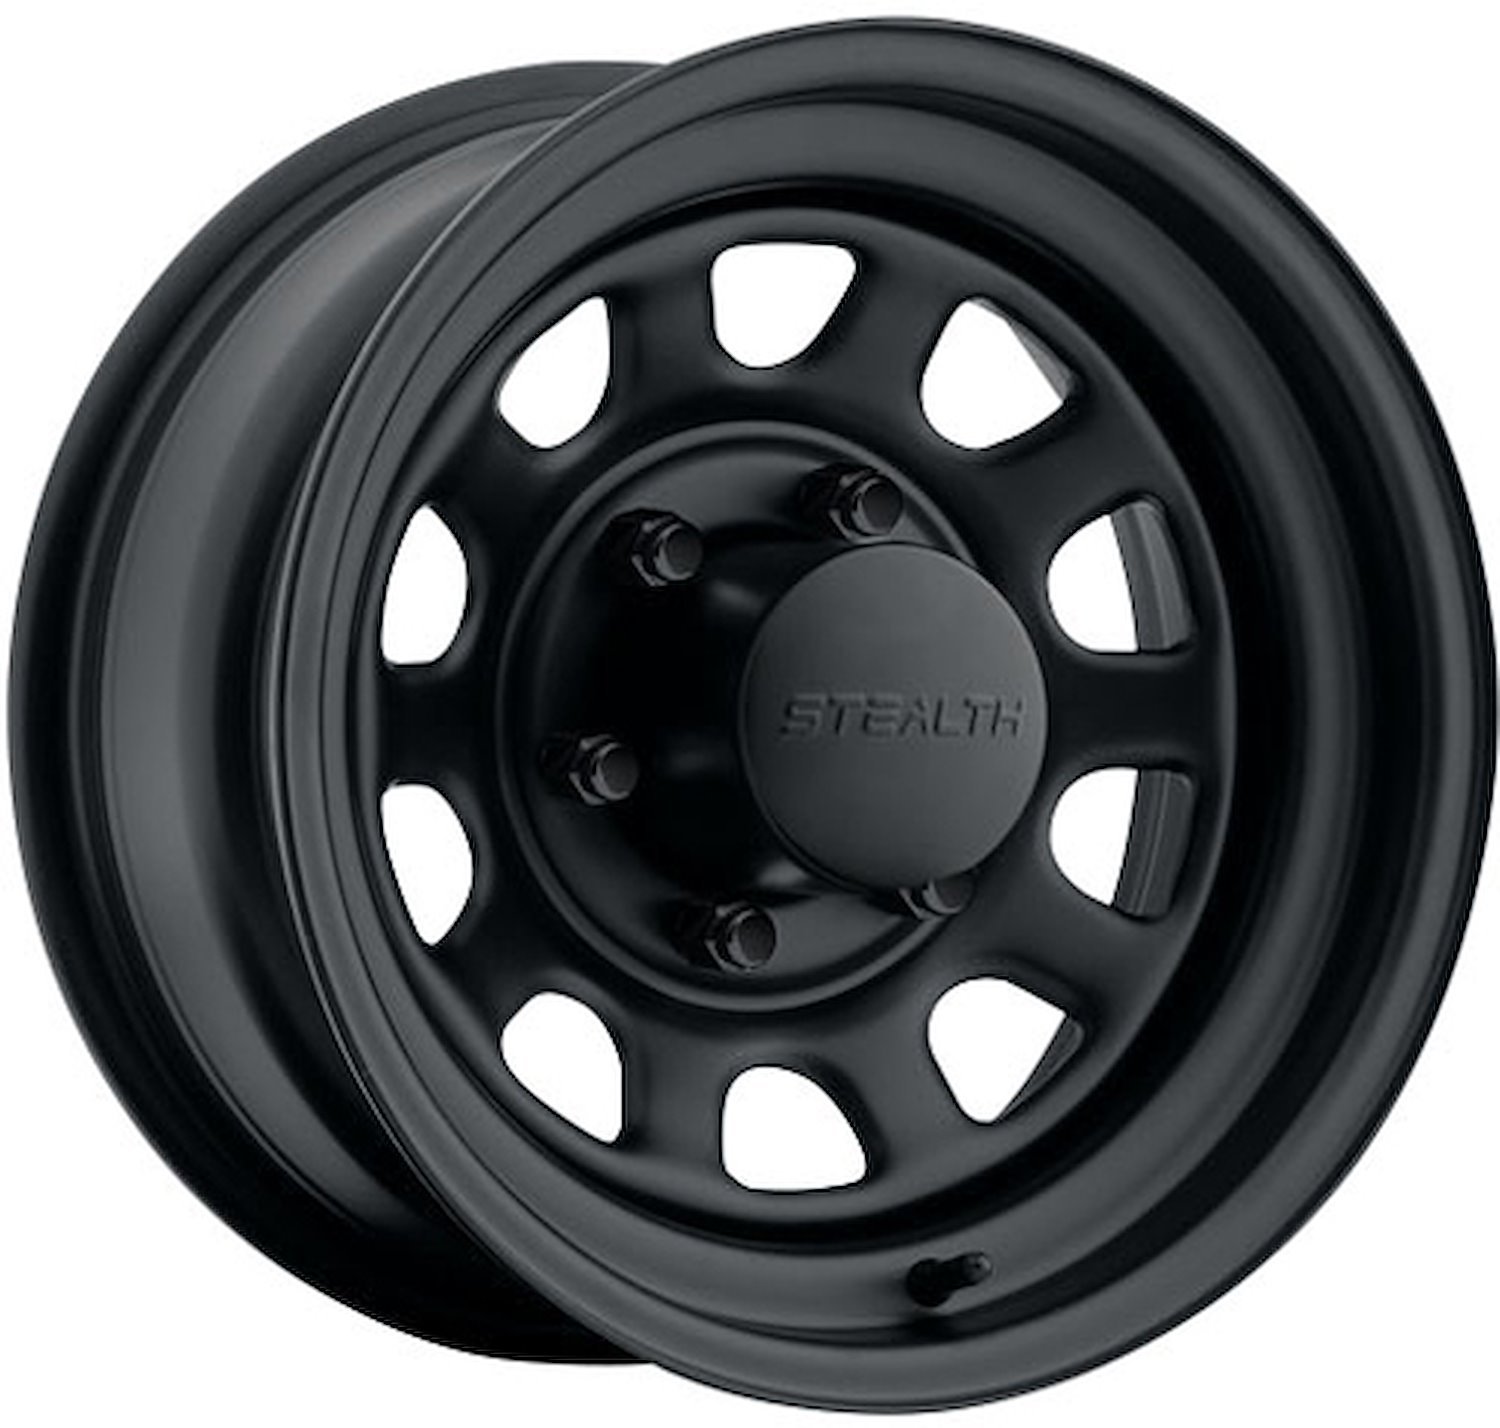 Stealth Black Daytona Wheel (Series 804) Size: 15" x 8"